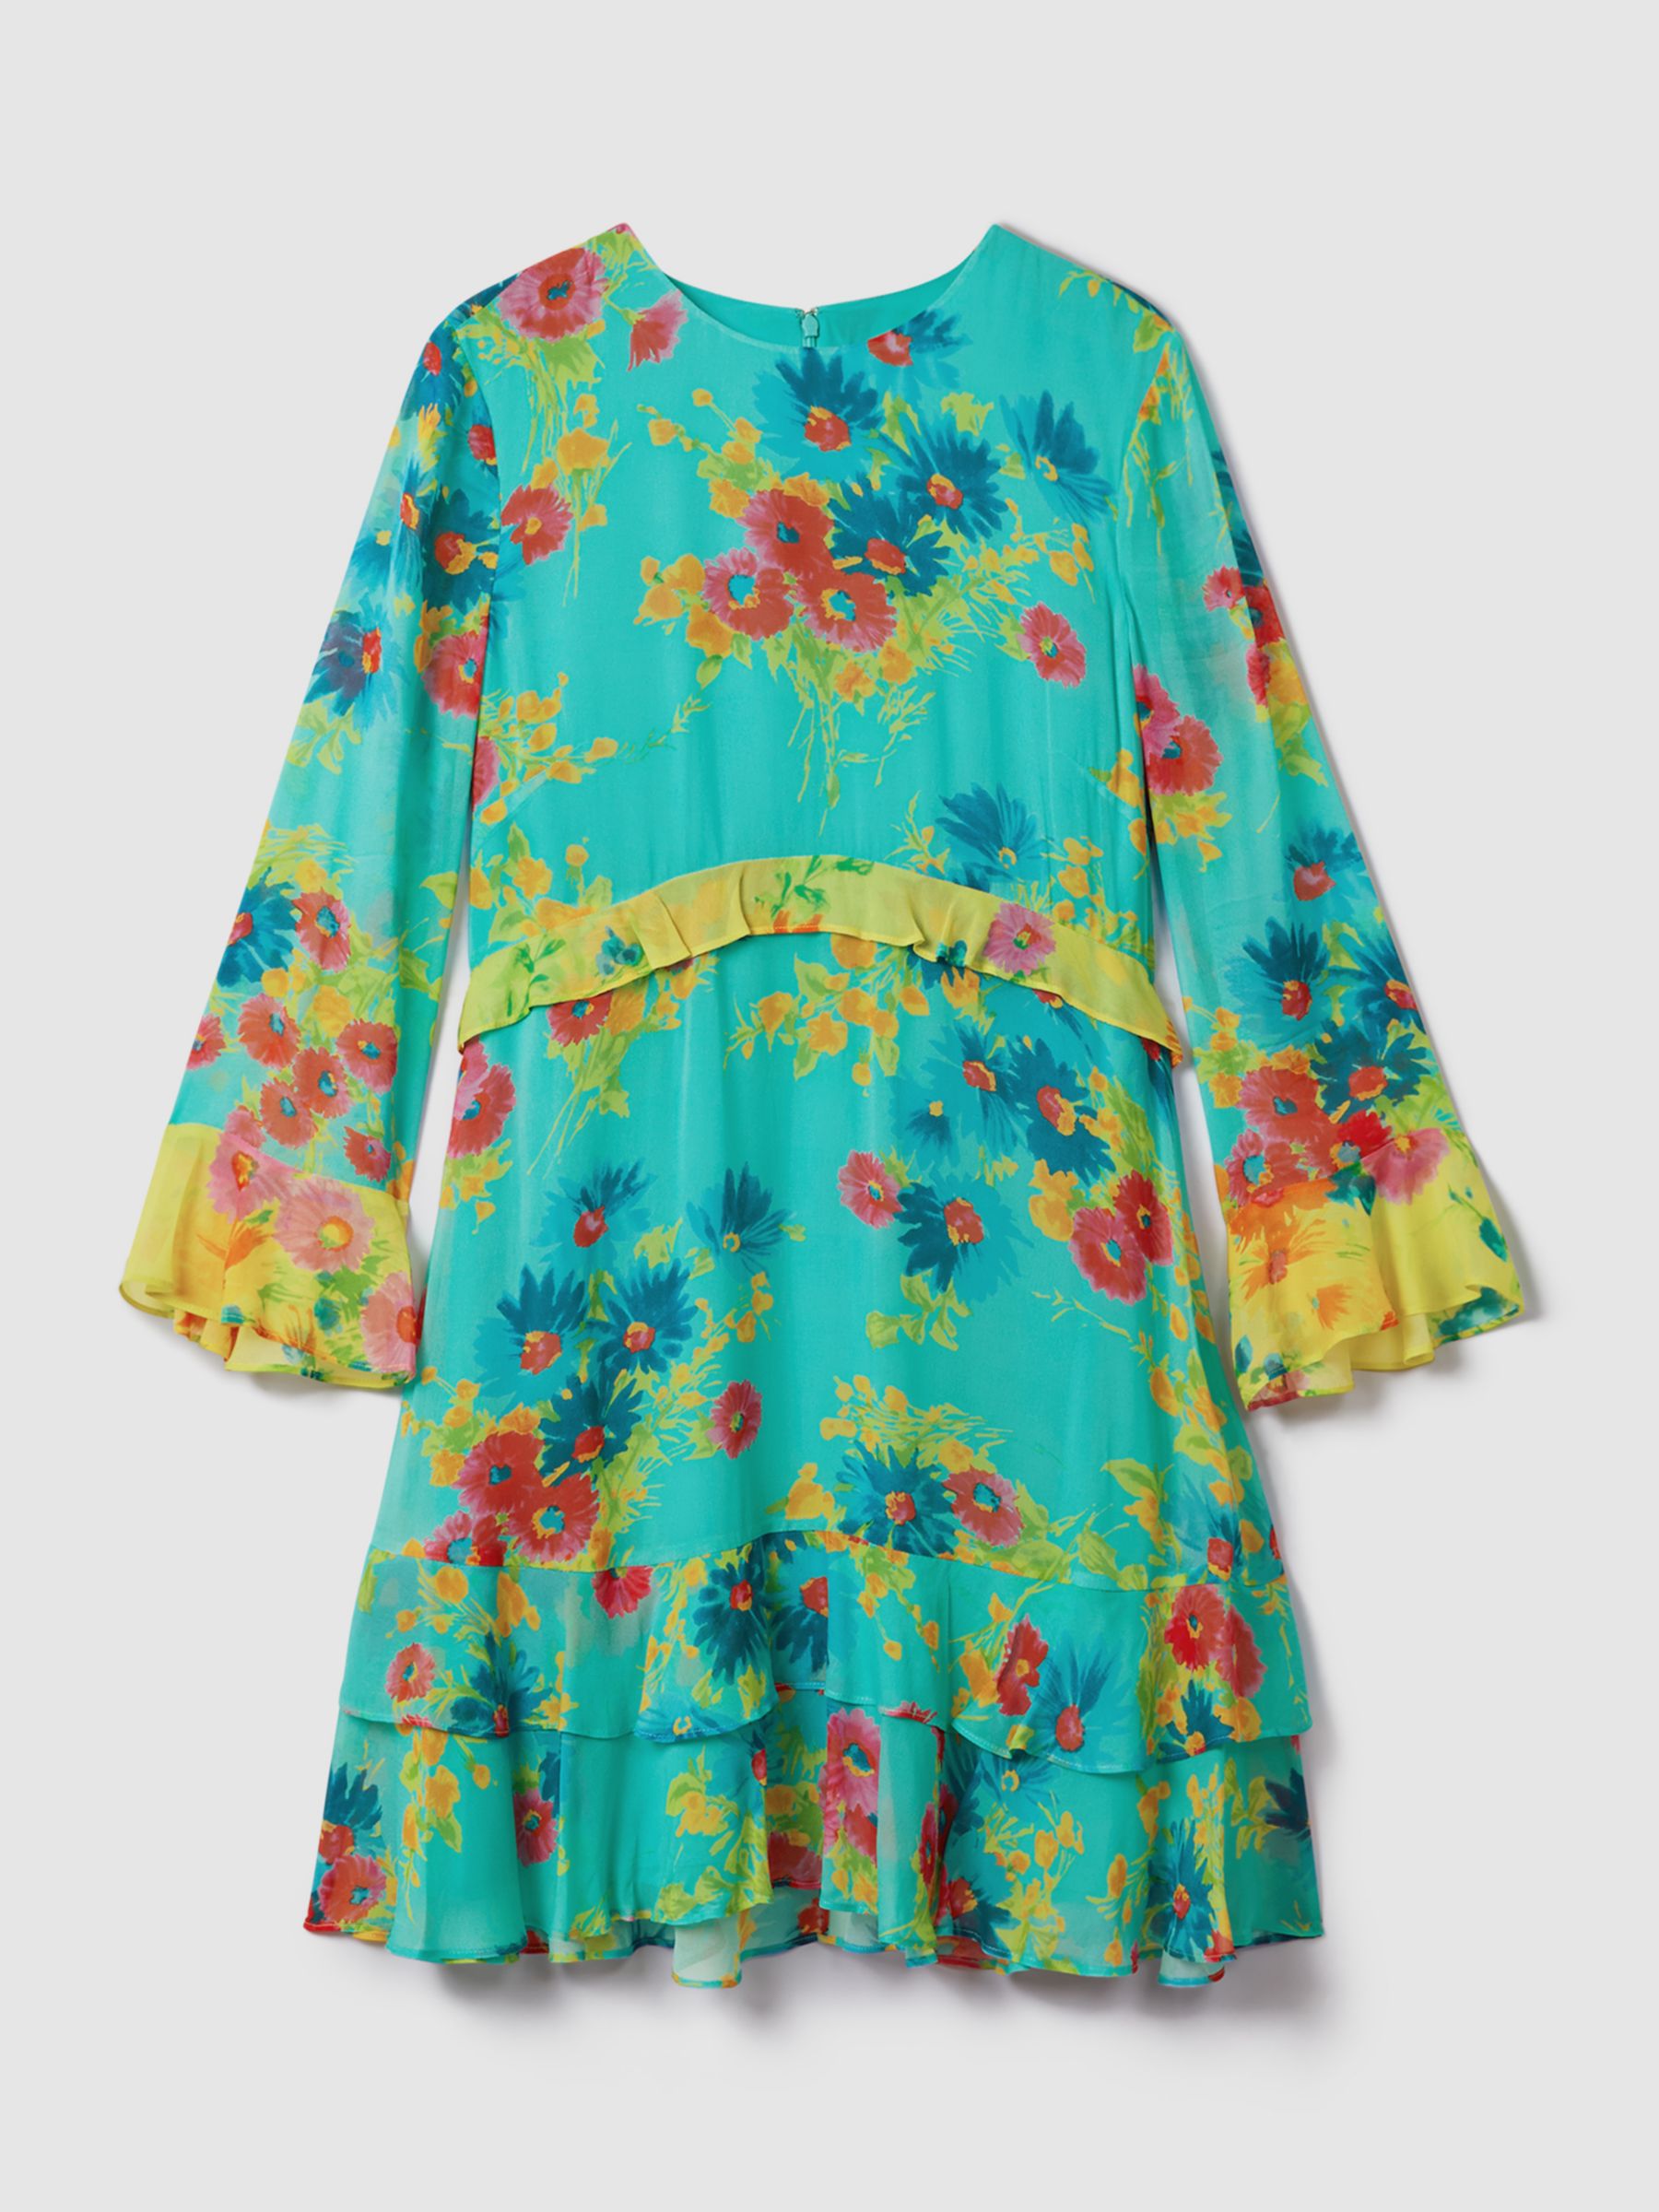 FLORERE Ruffle Contrast Mini Dress, Turquoise/Multi, 14